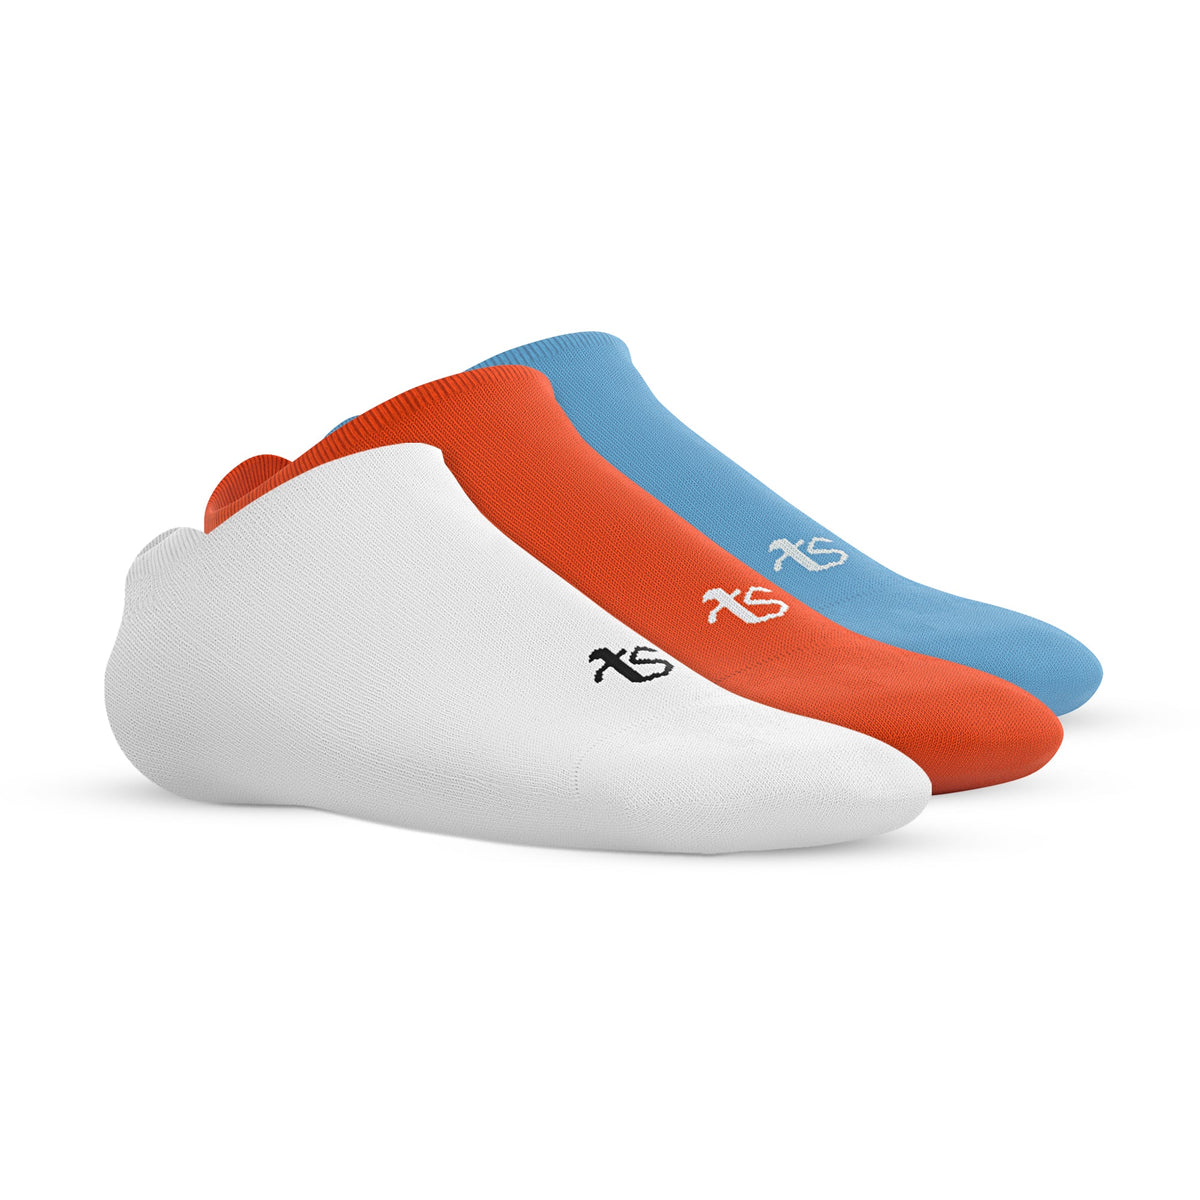 Loafer – Ever Ready – White, Orange, Sky Blue – Set of 3